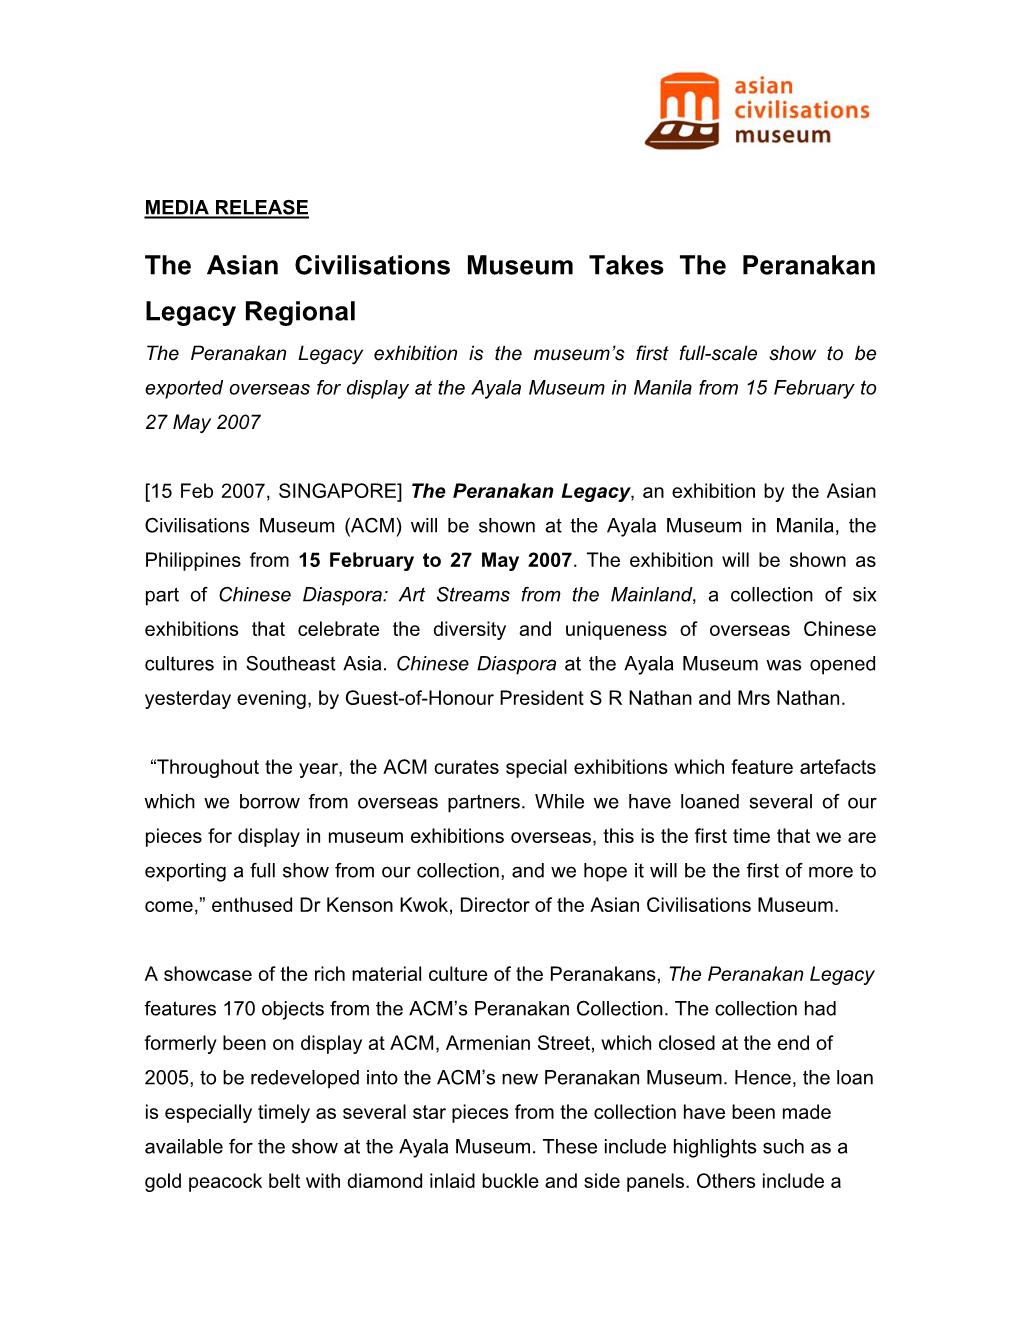 15 February 2007:The Asian Civilisations Museum Takes the Peranakan Legacy Regional